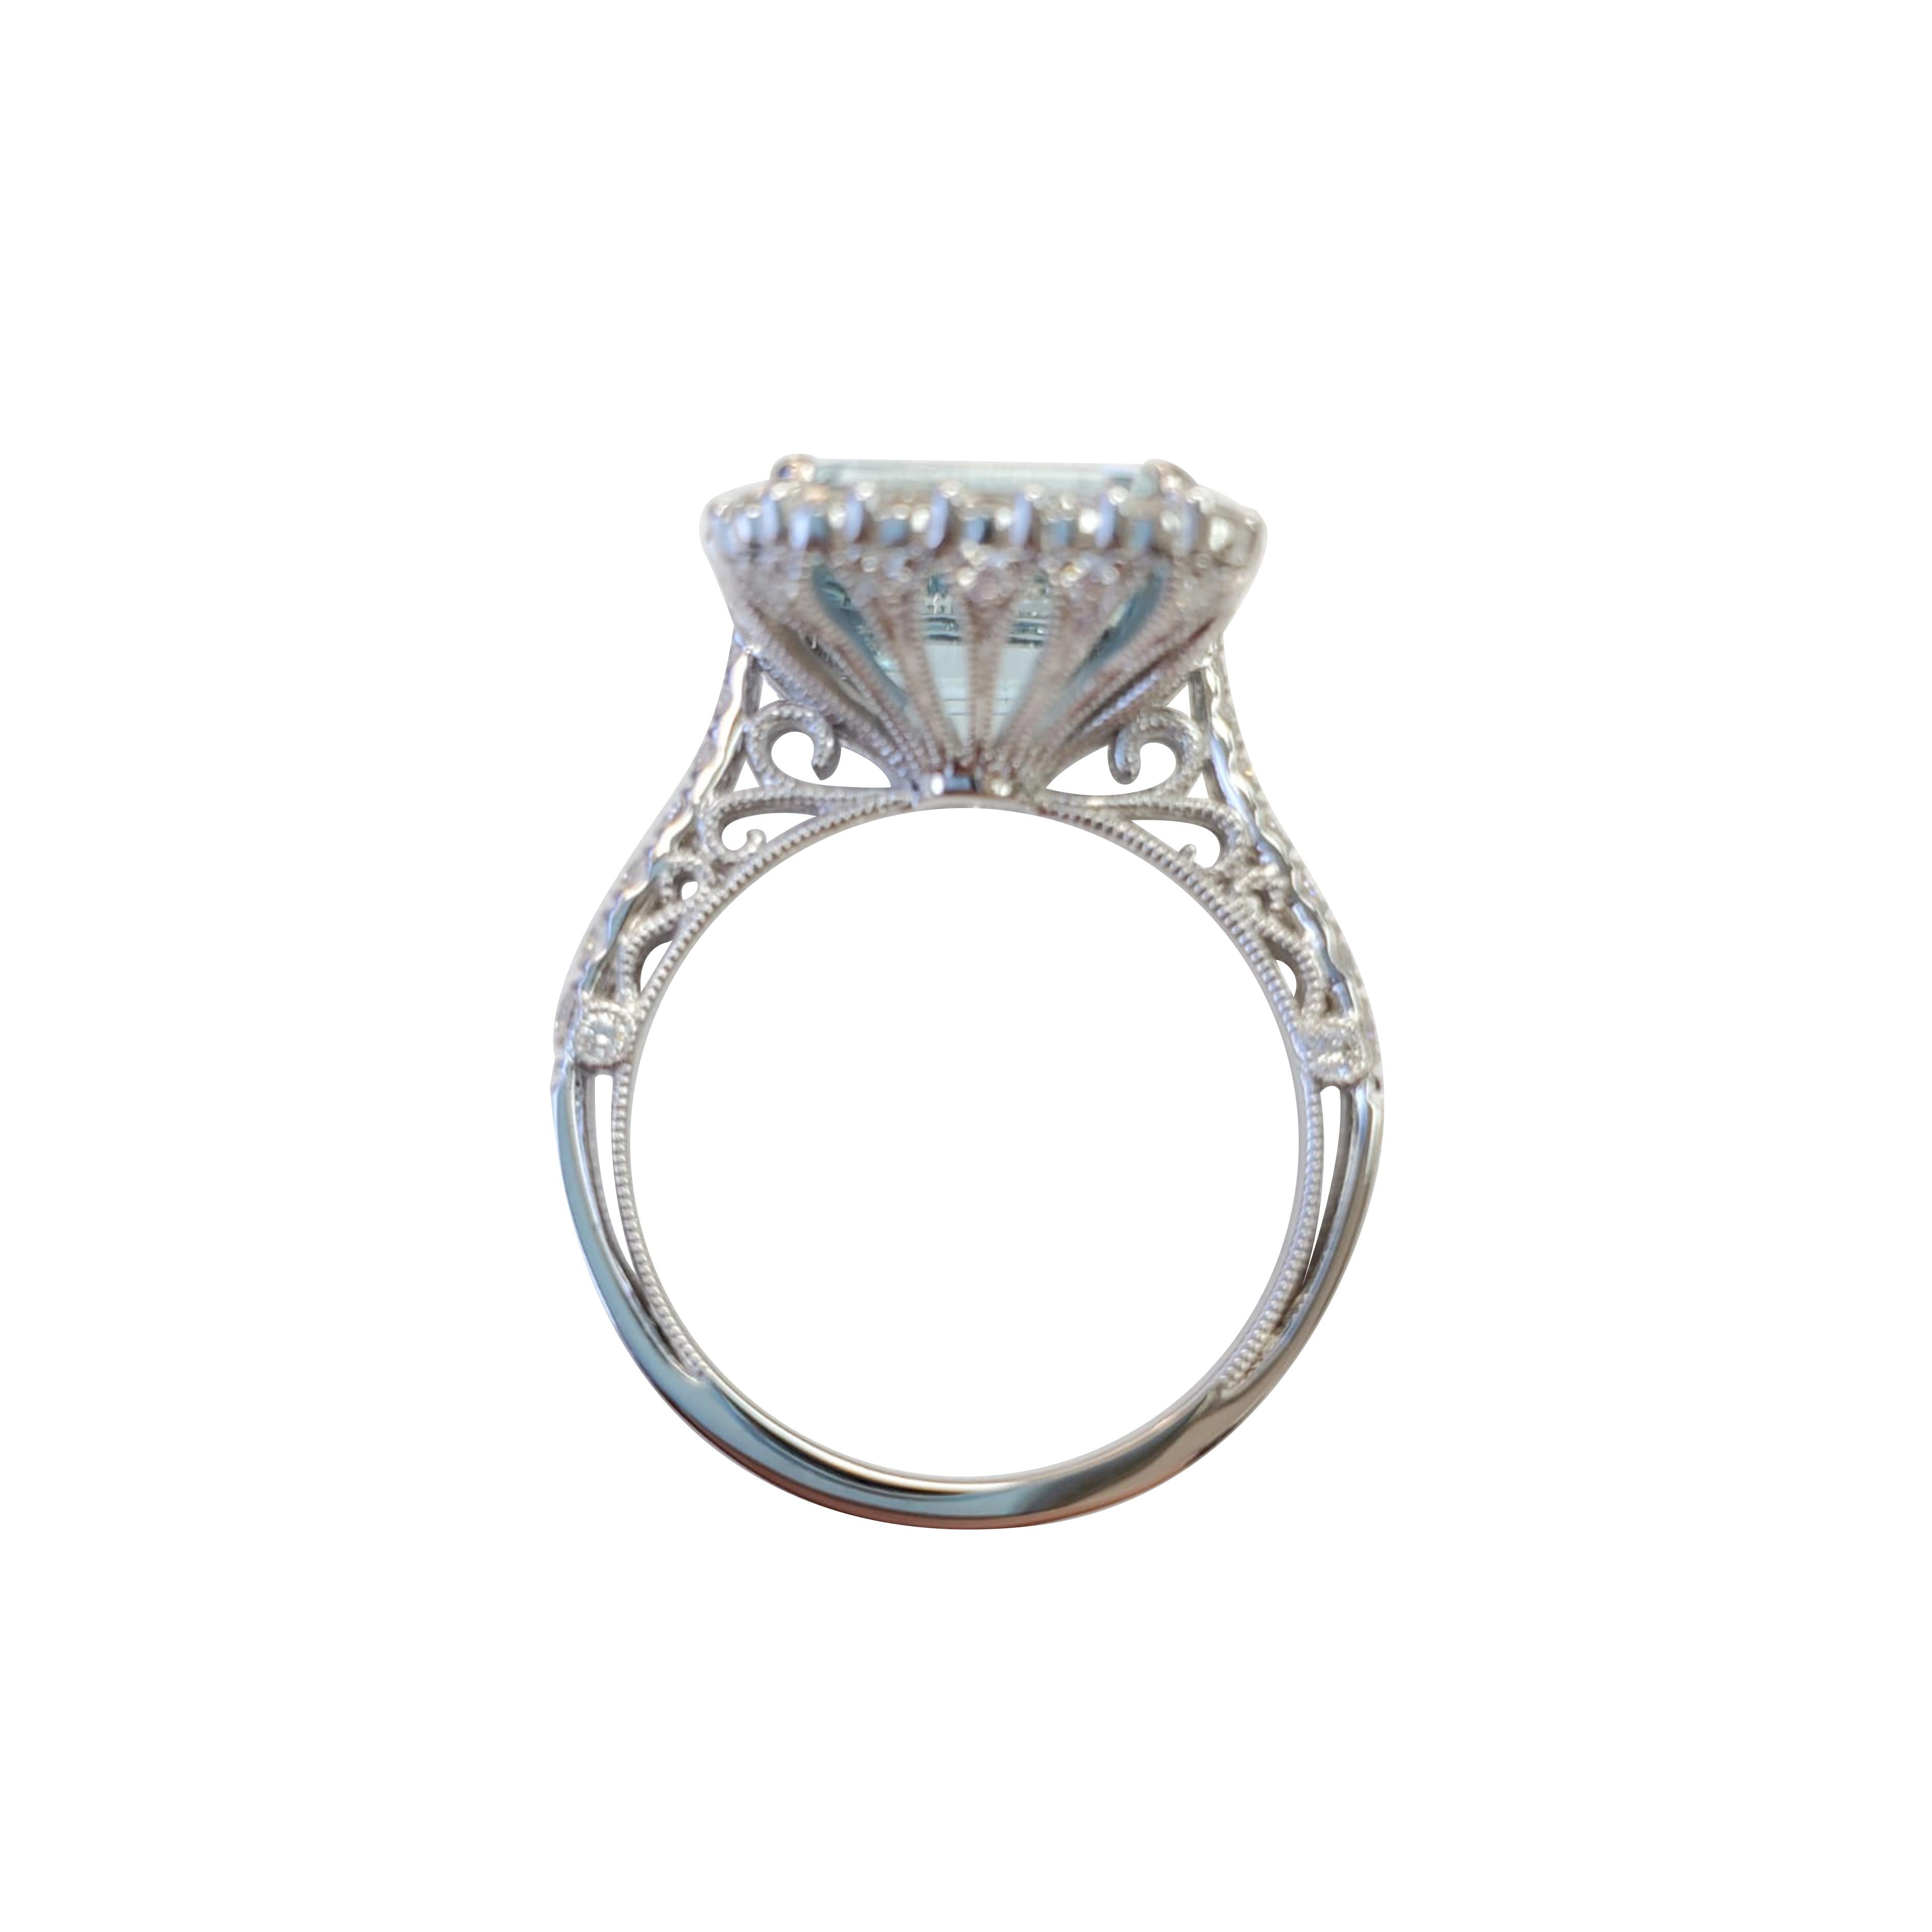 Aqua Stone (Emerald Cut) - 5.54ct

White Diamond - 0.92ct

White Gold - 18k